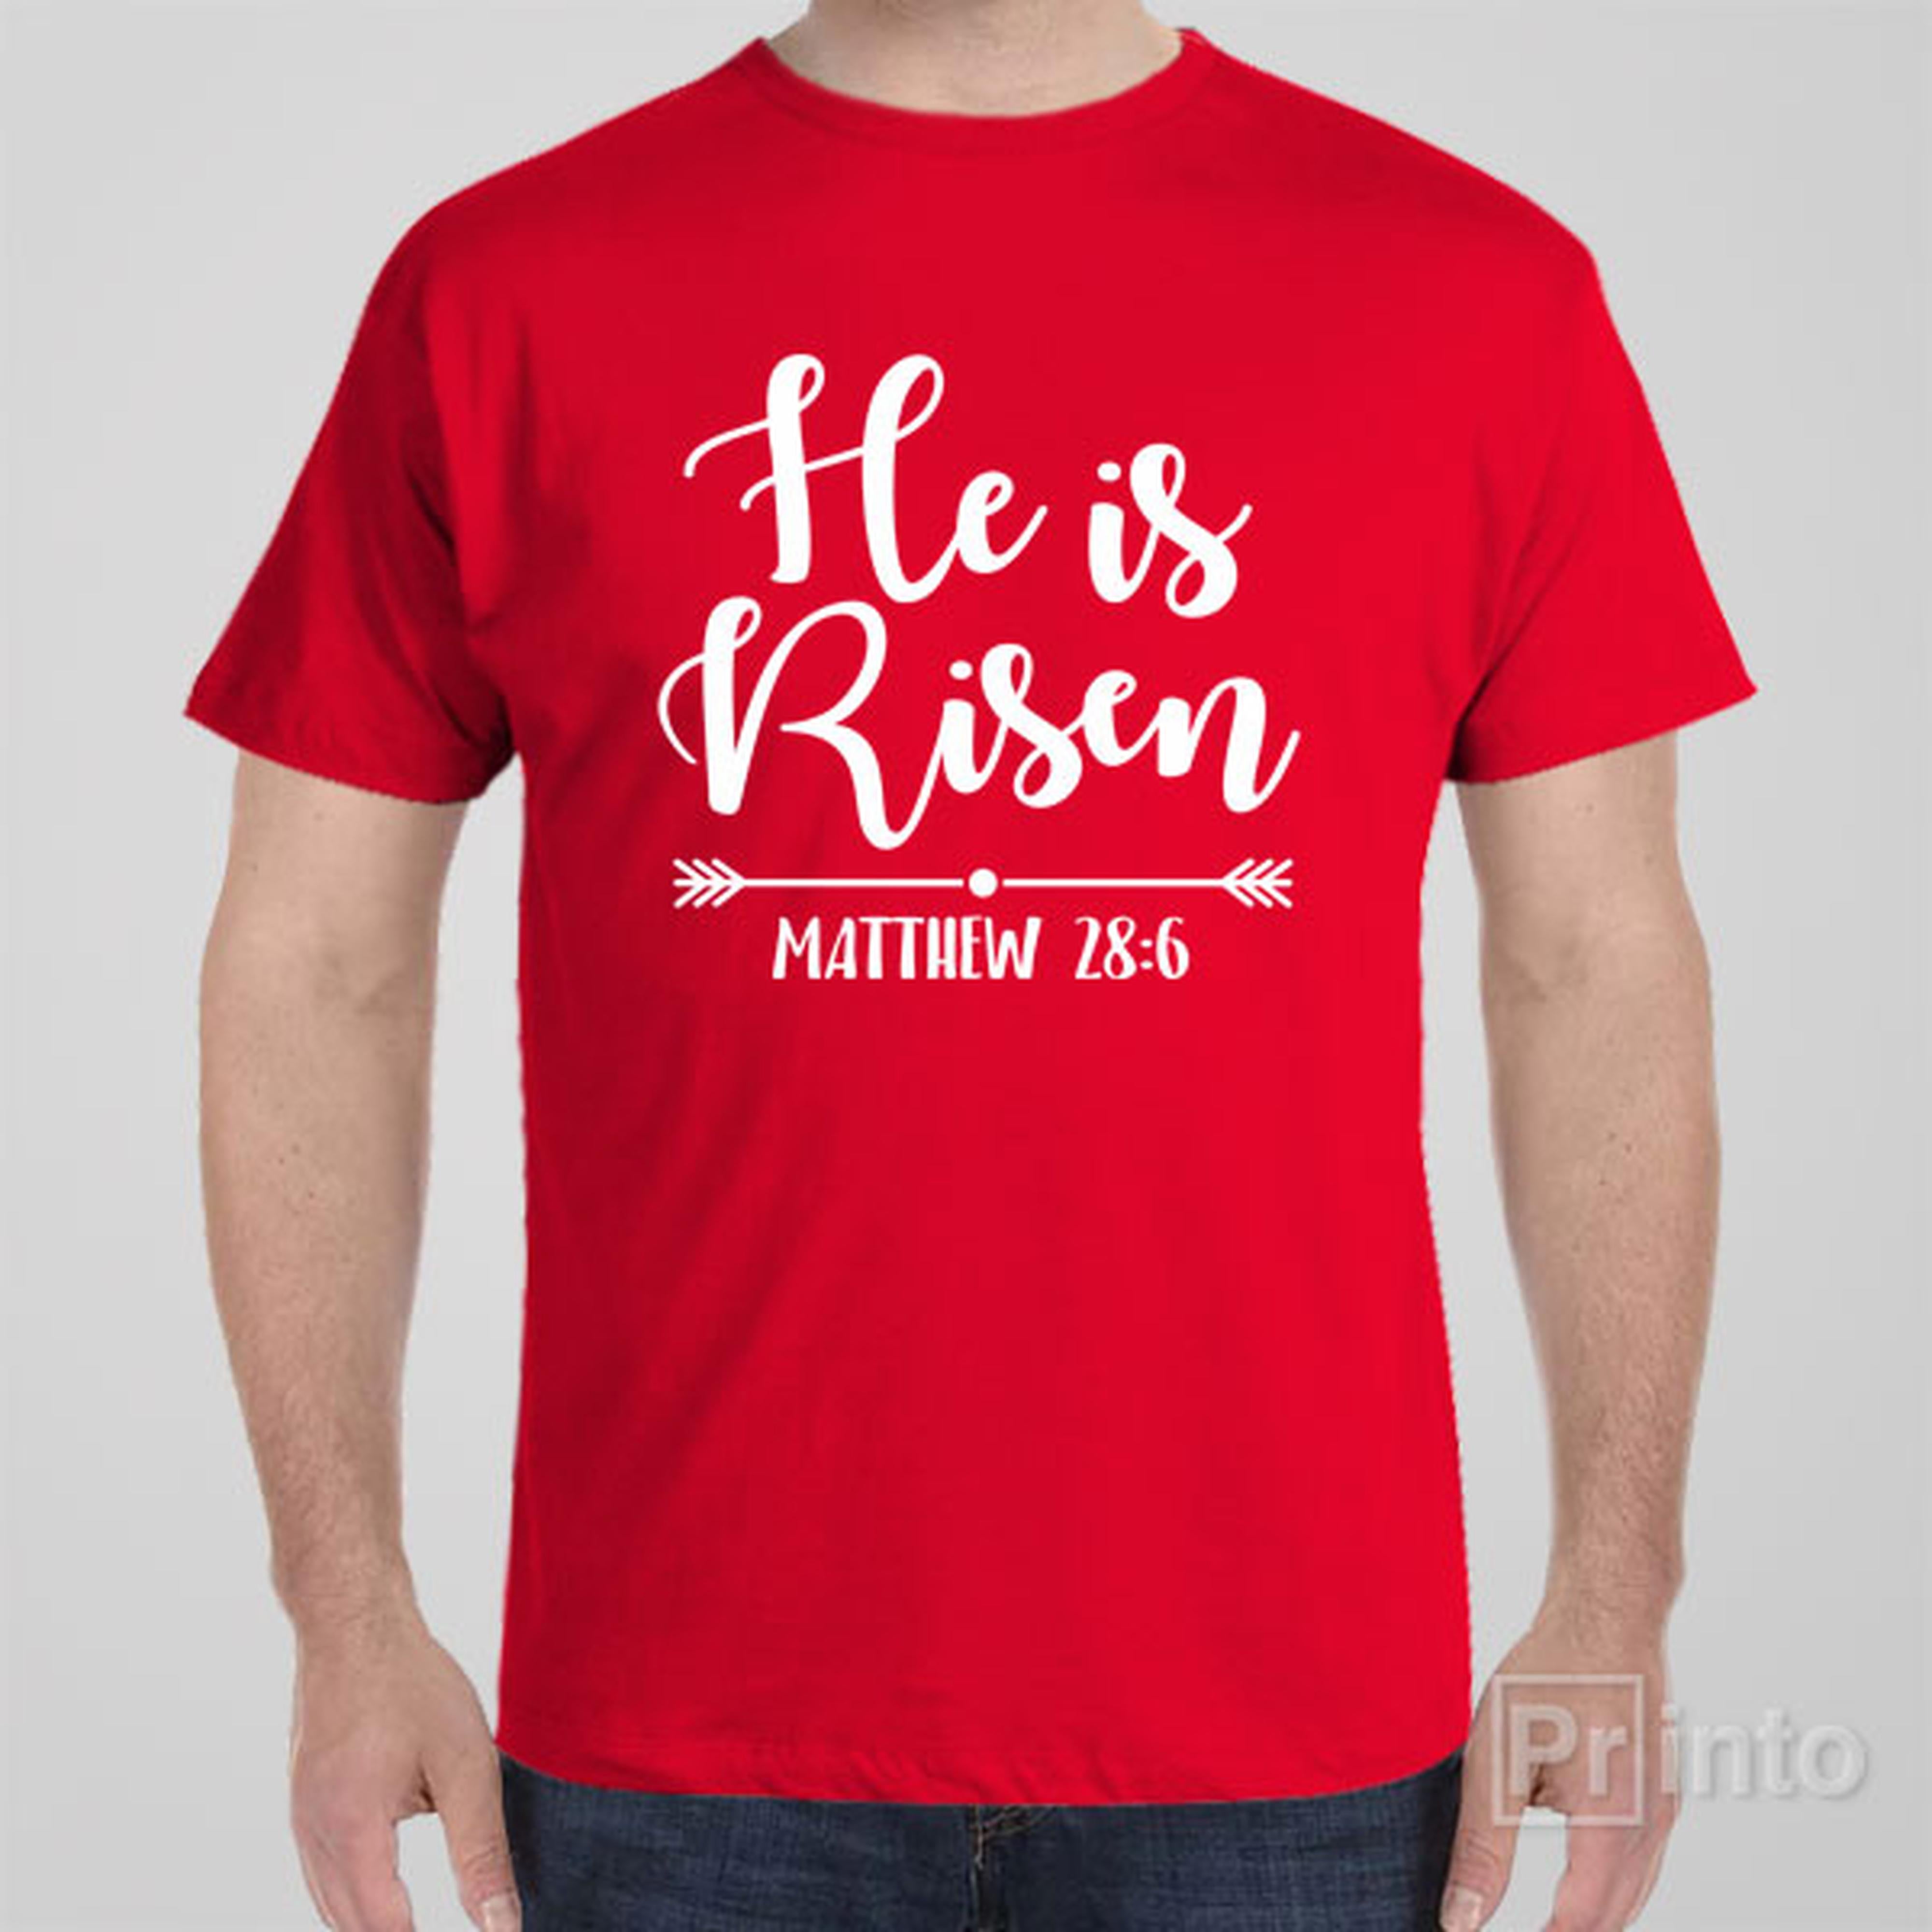 he-is-risen-t-shirt